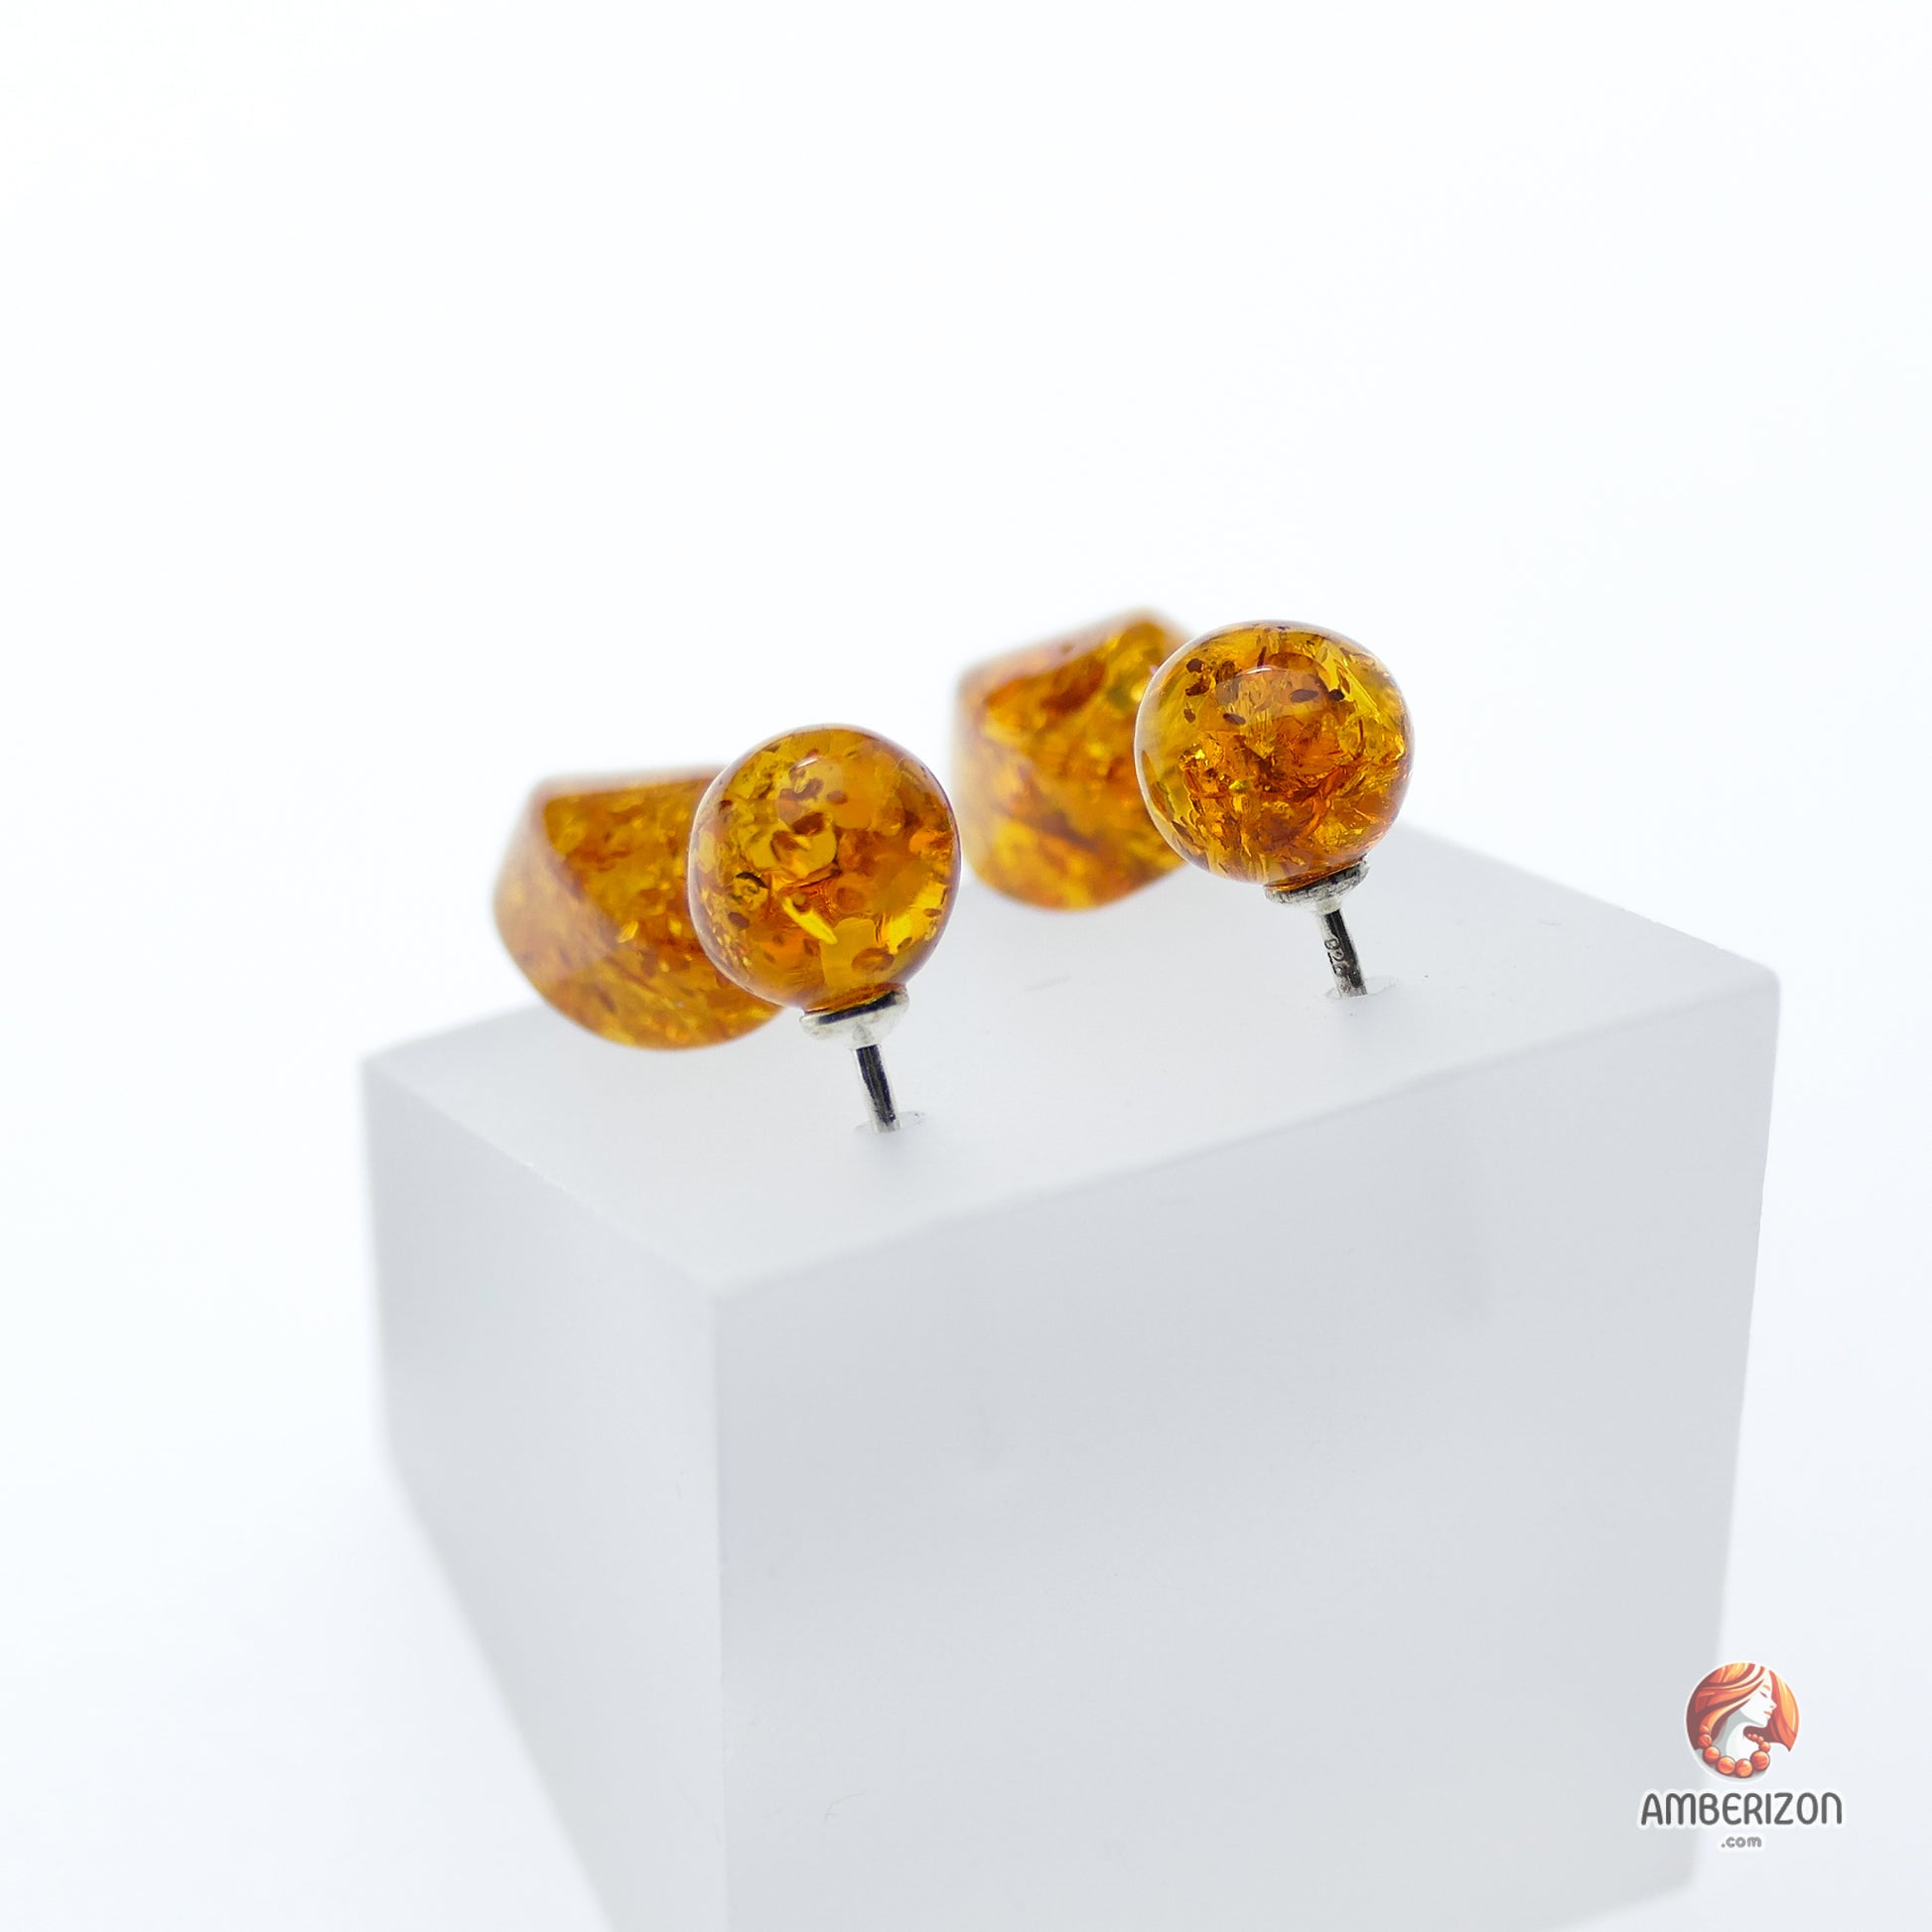 Baltic amber earrings - Honey dongle earrings